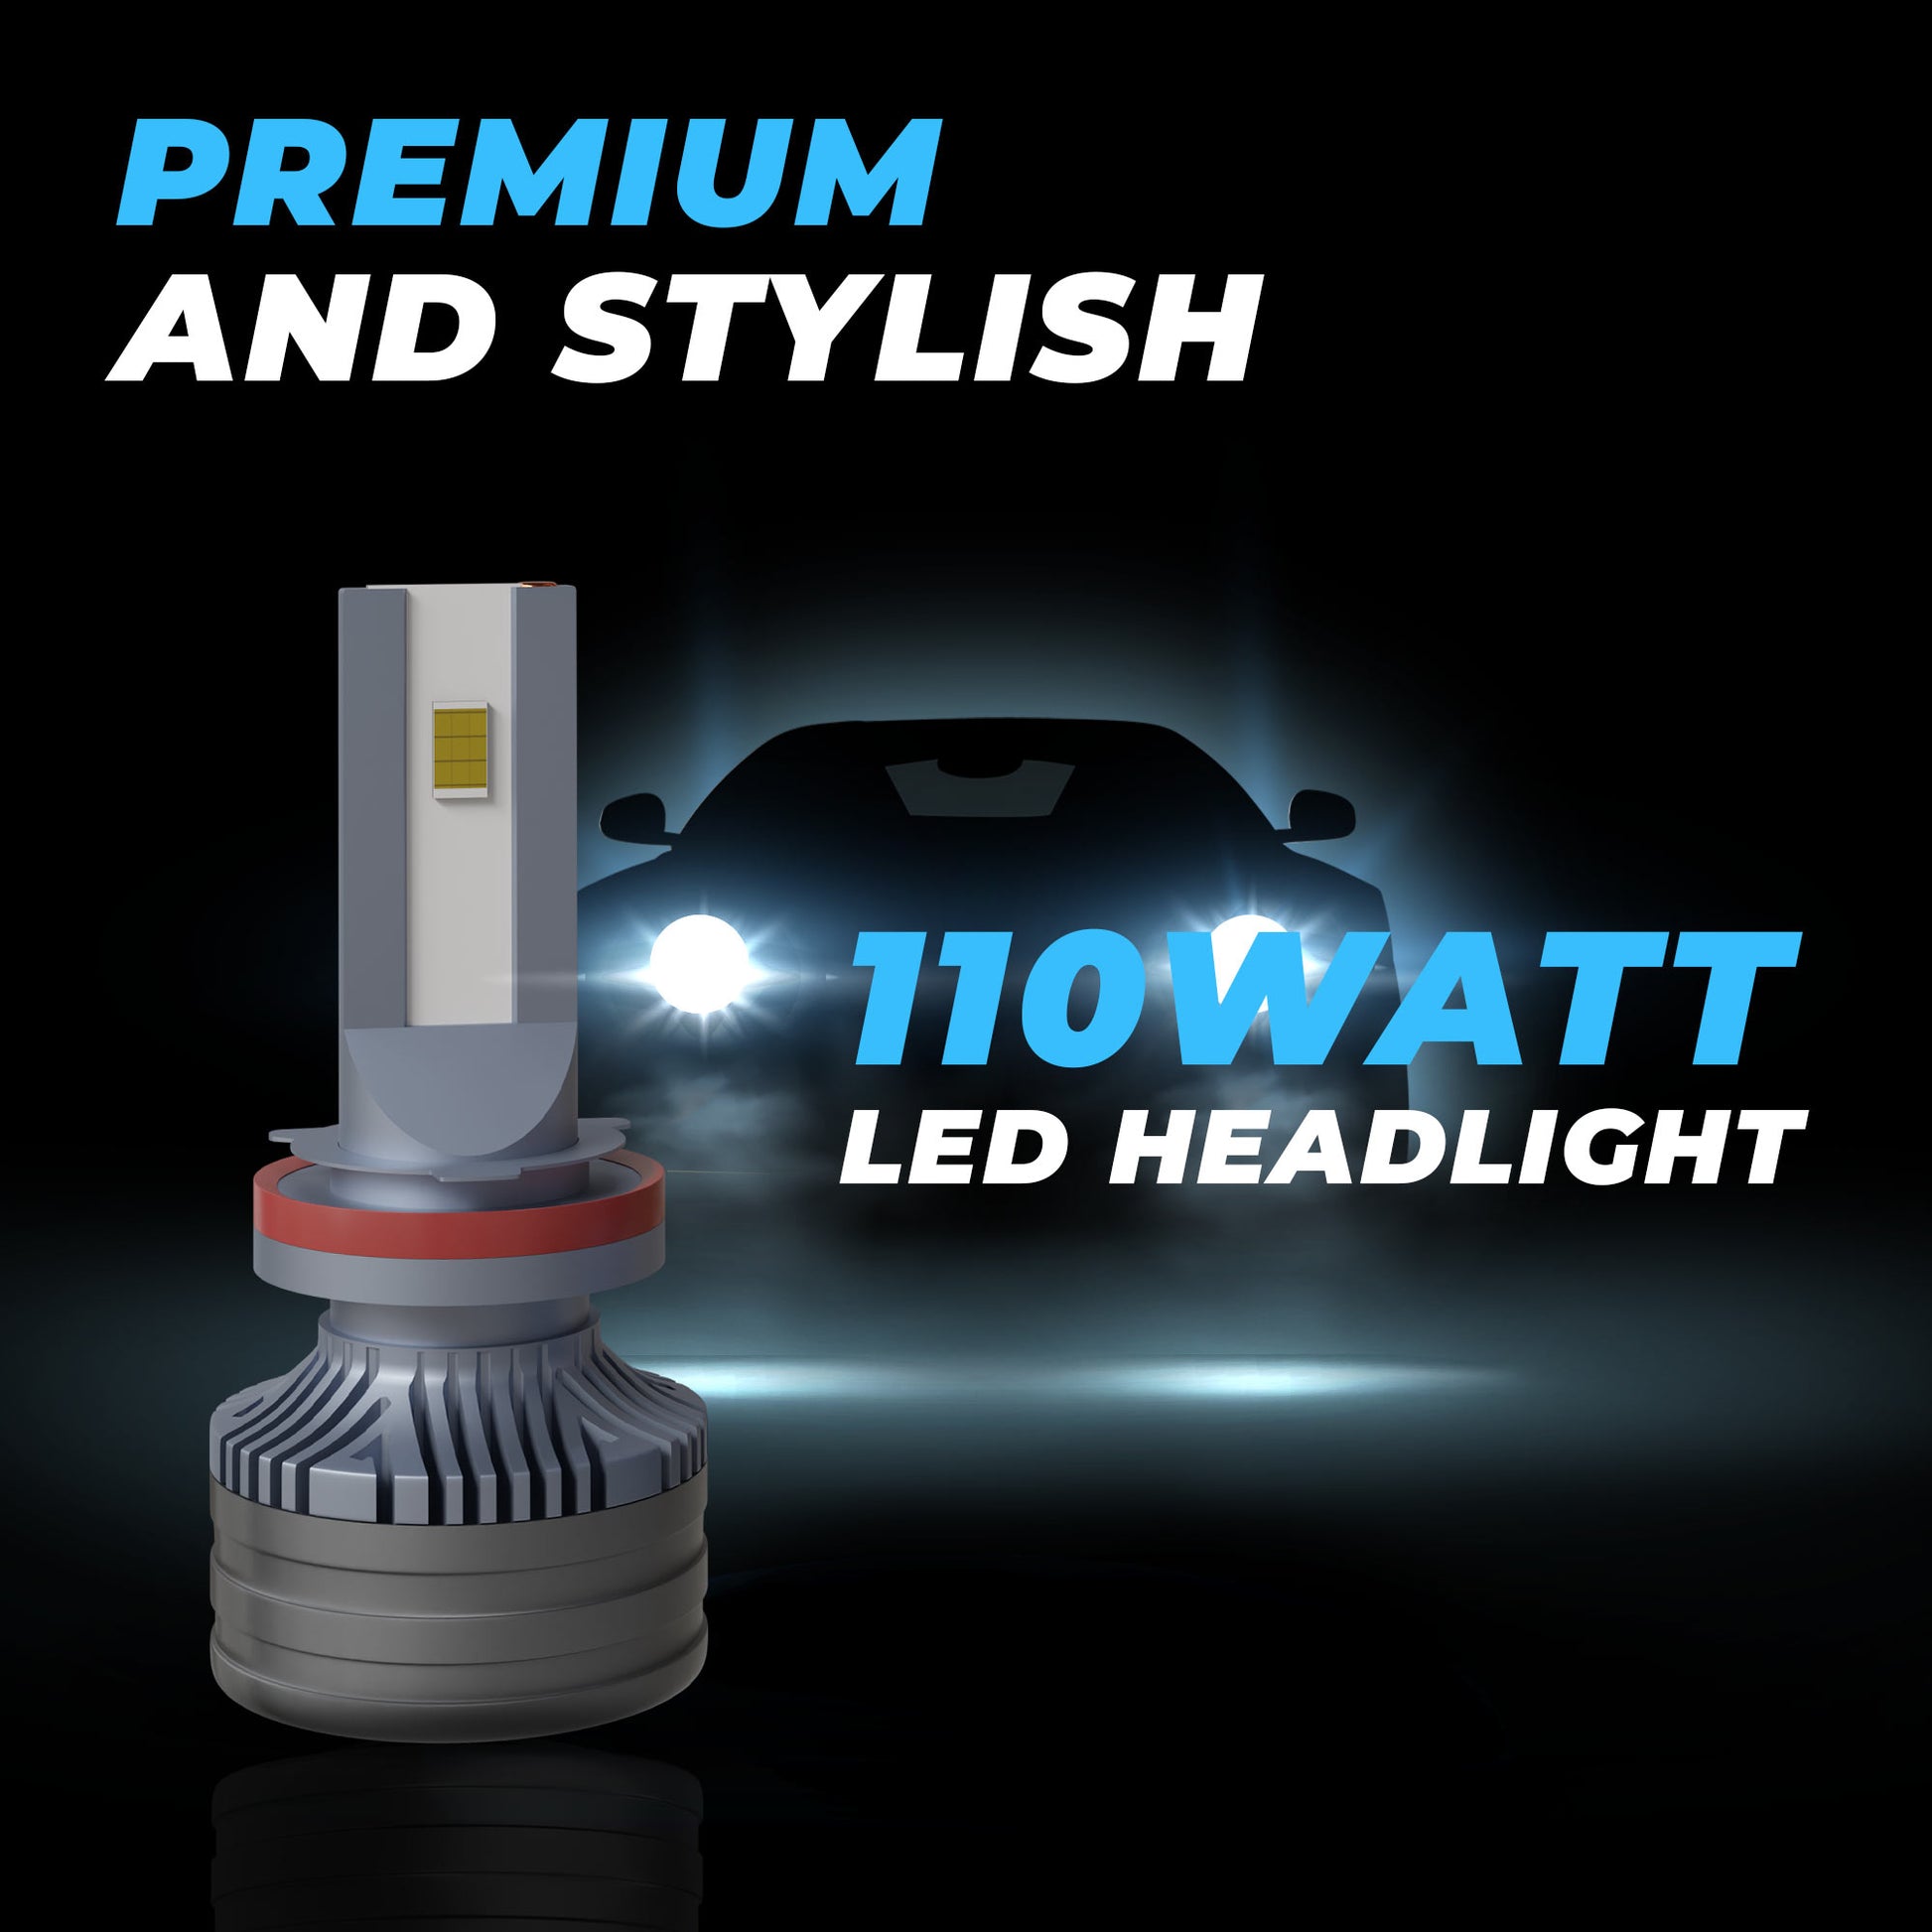 JCBL ACCESSORIES Lumenz 9006 110W Car Headlight LED Bulb, 8000 Lumens Dual-Beam, 6000-6500K Day Light, Weather-Resistant IP67 Waterproof | PREMIUM AND STYLISH ~ 110W LED HEADLIGHT 